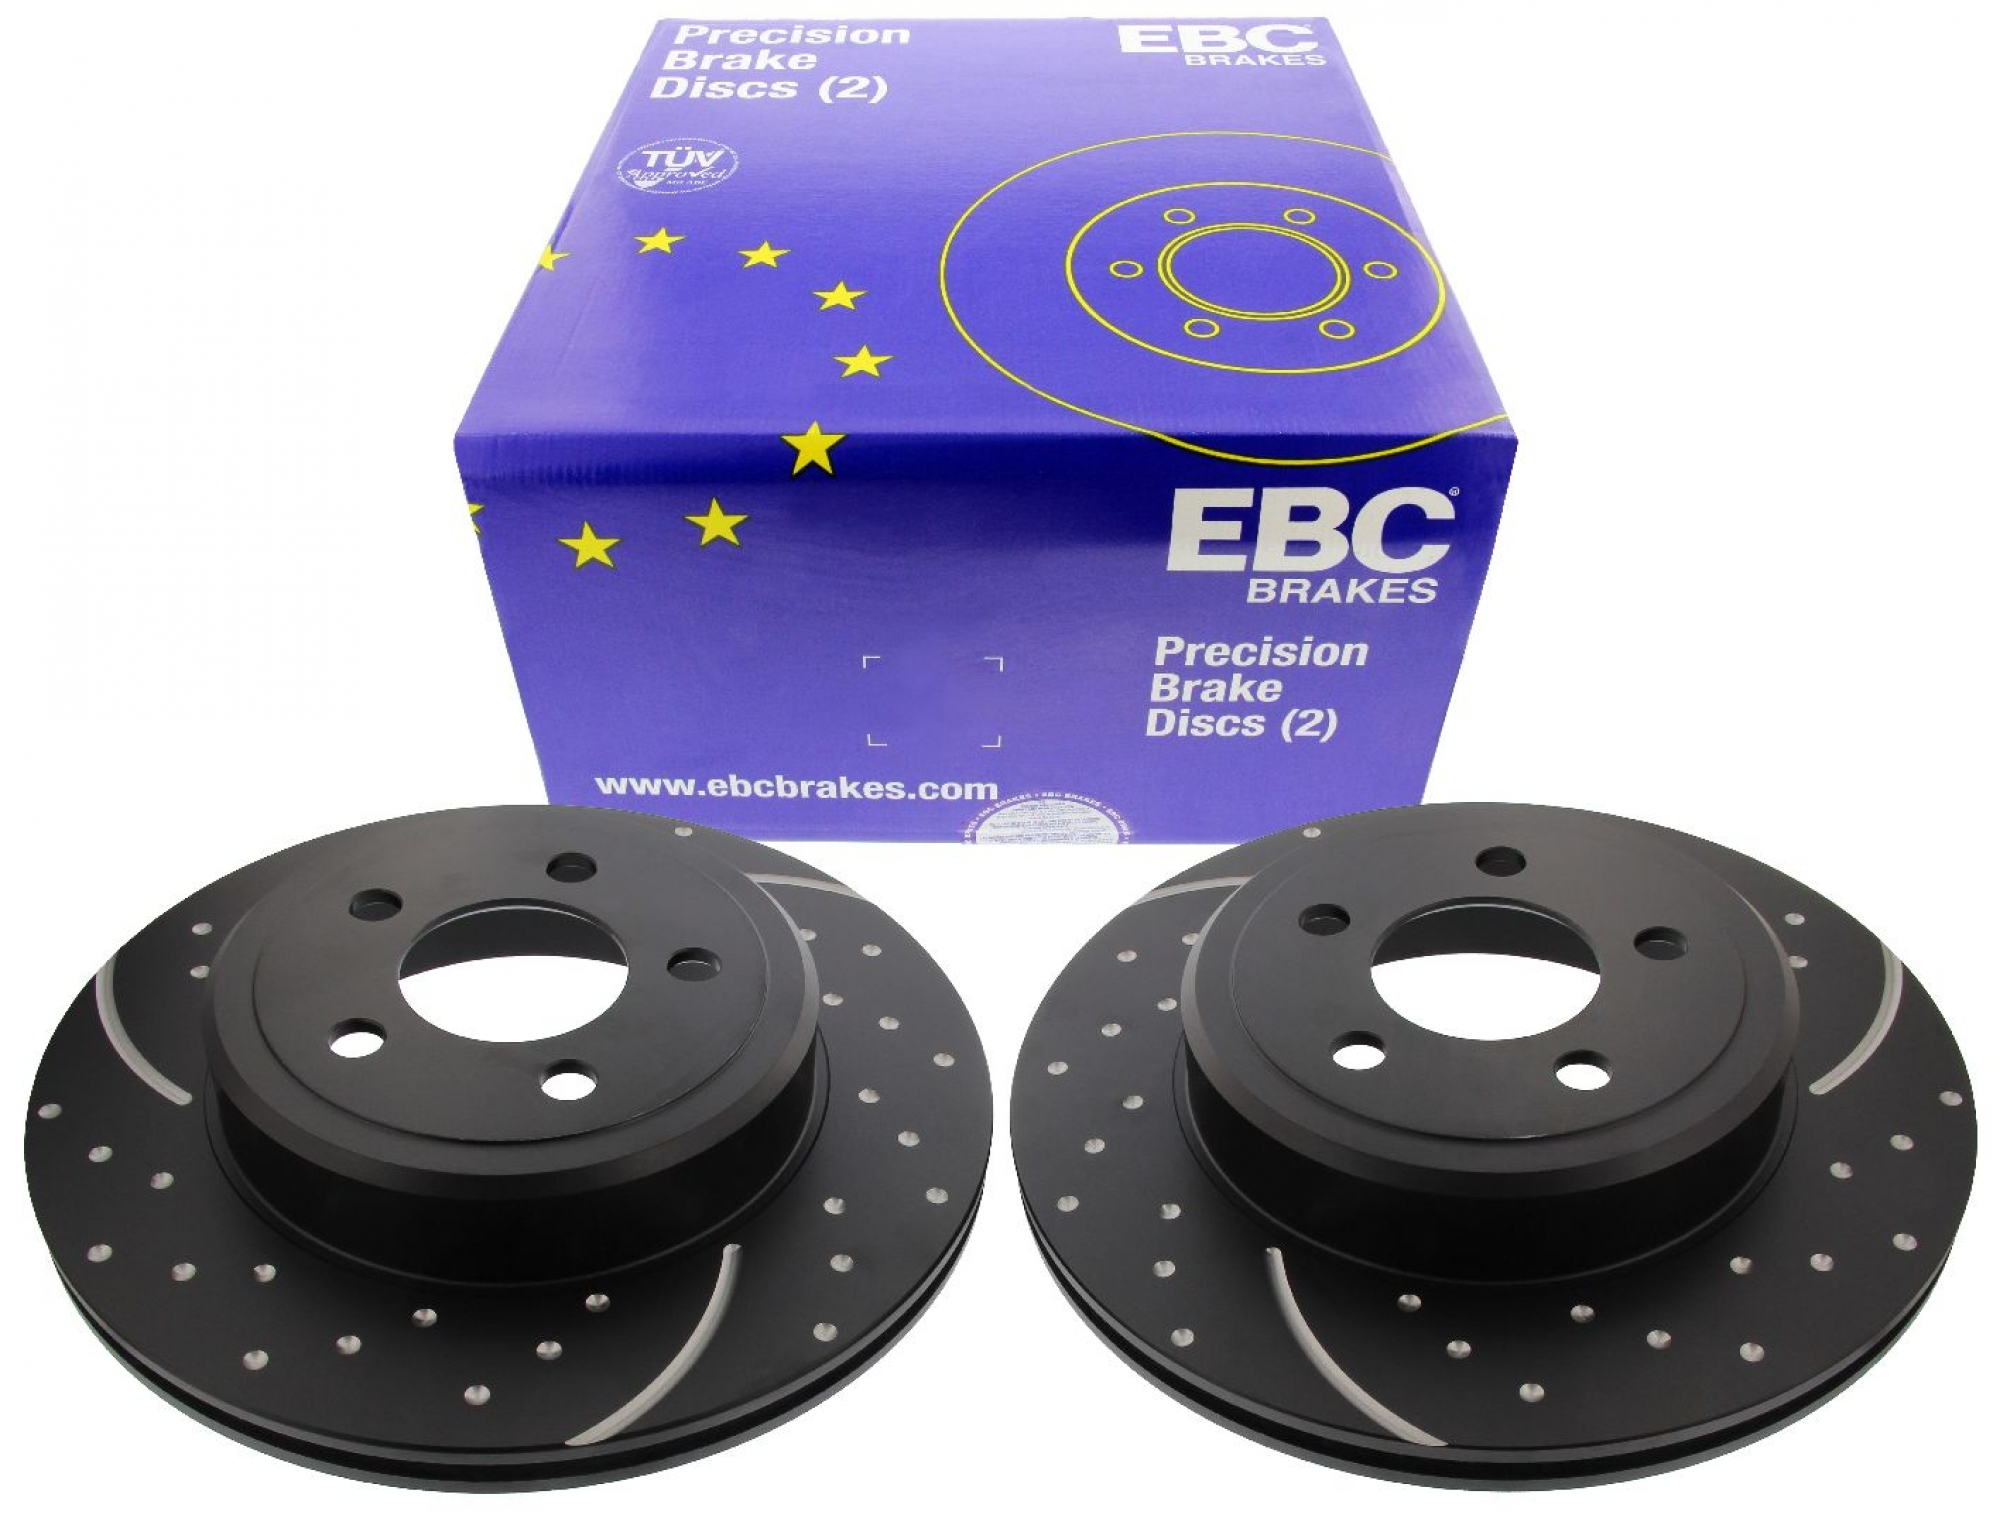 EBC-Bremsscheiben, Turbo Groove Disc Black (2-teilig), HA, Chrysler